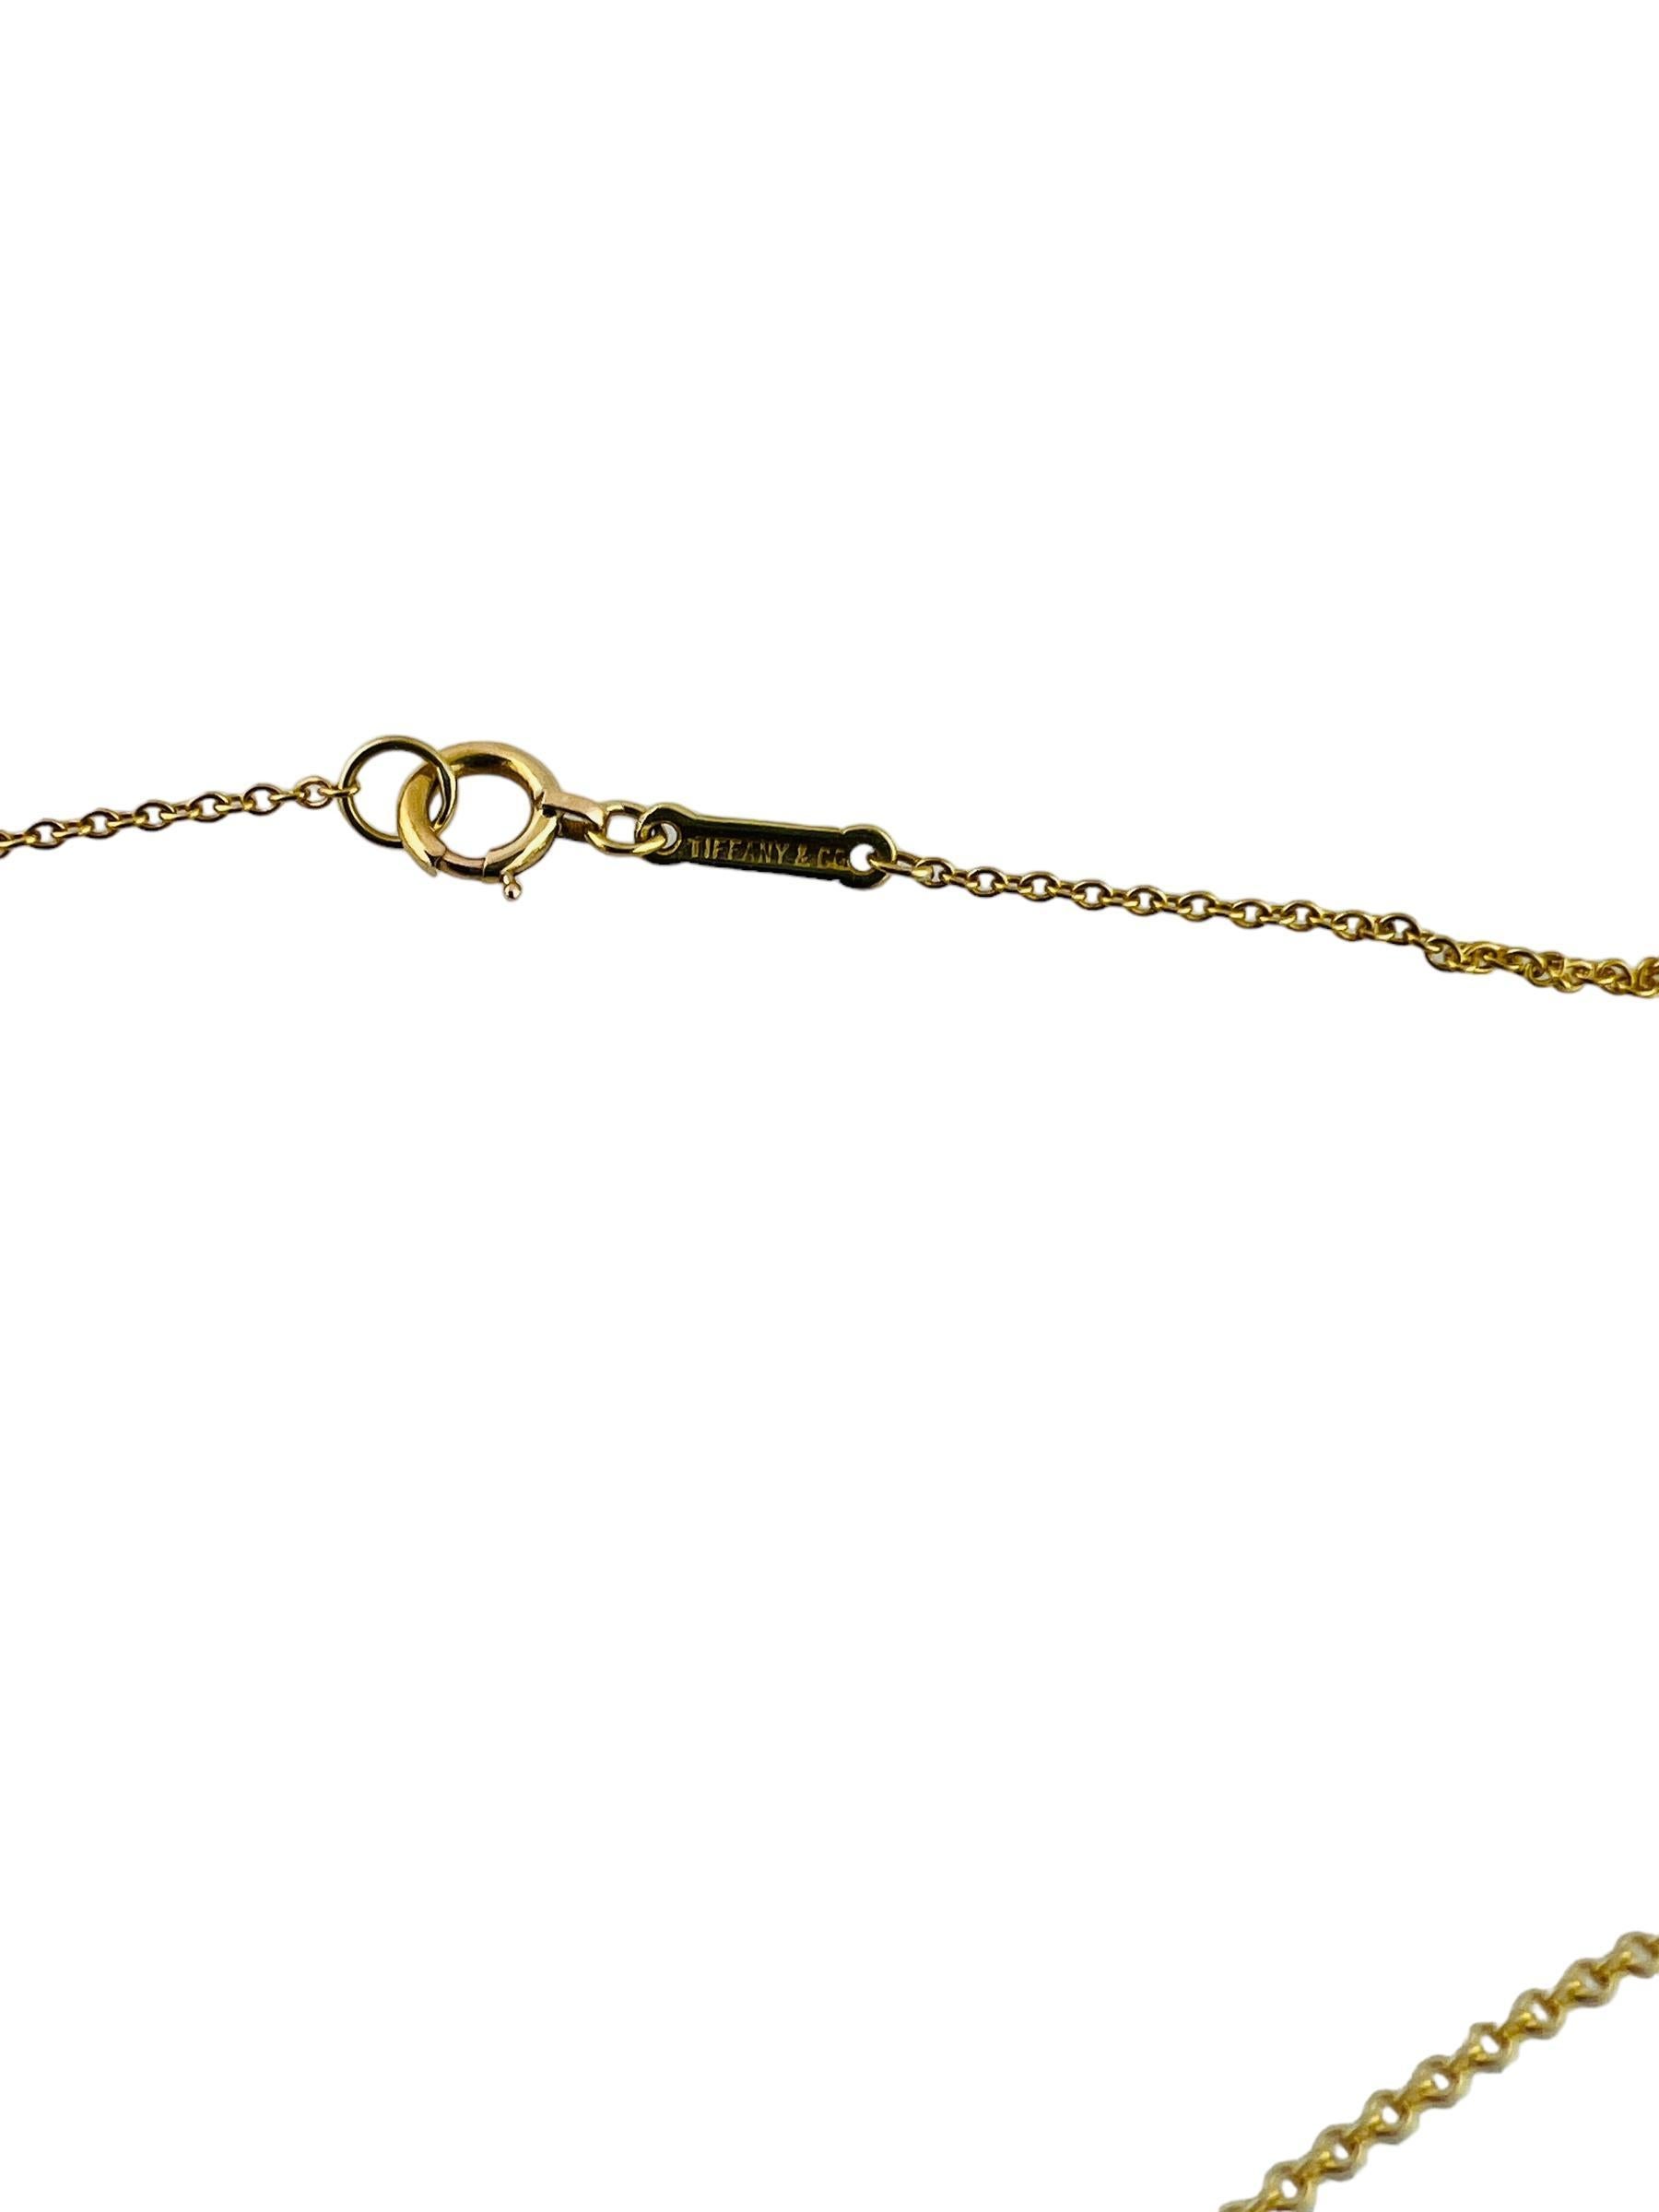 Tiffany & Co. Elsa Peretti 18K Yellow Gold Open Heart Pendant Necklace #15424 3